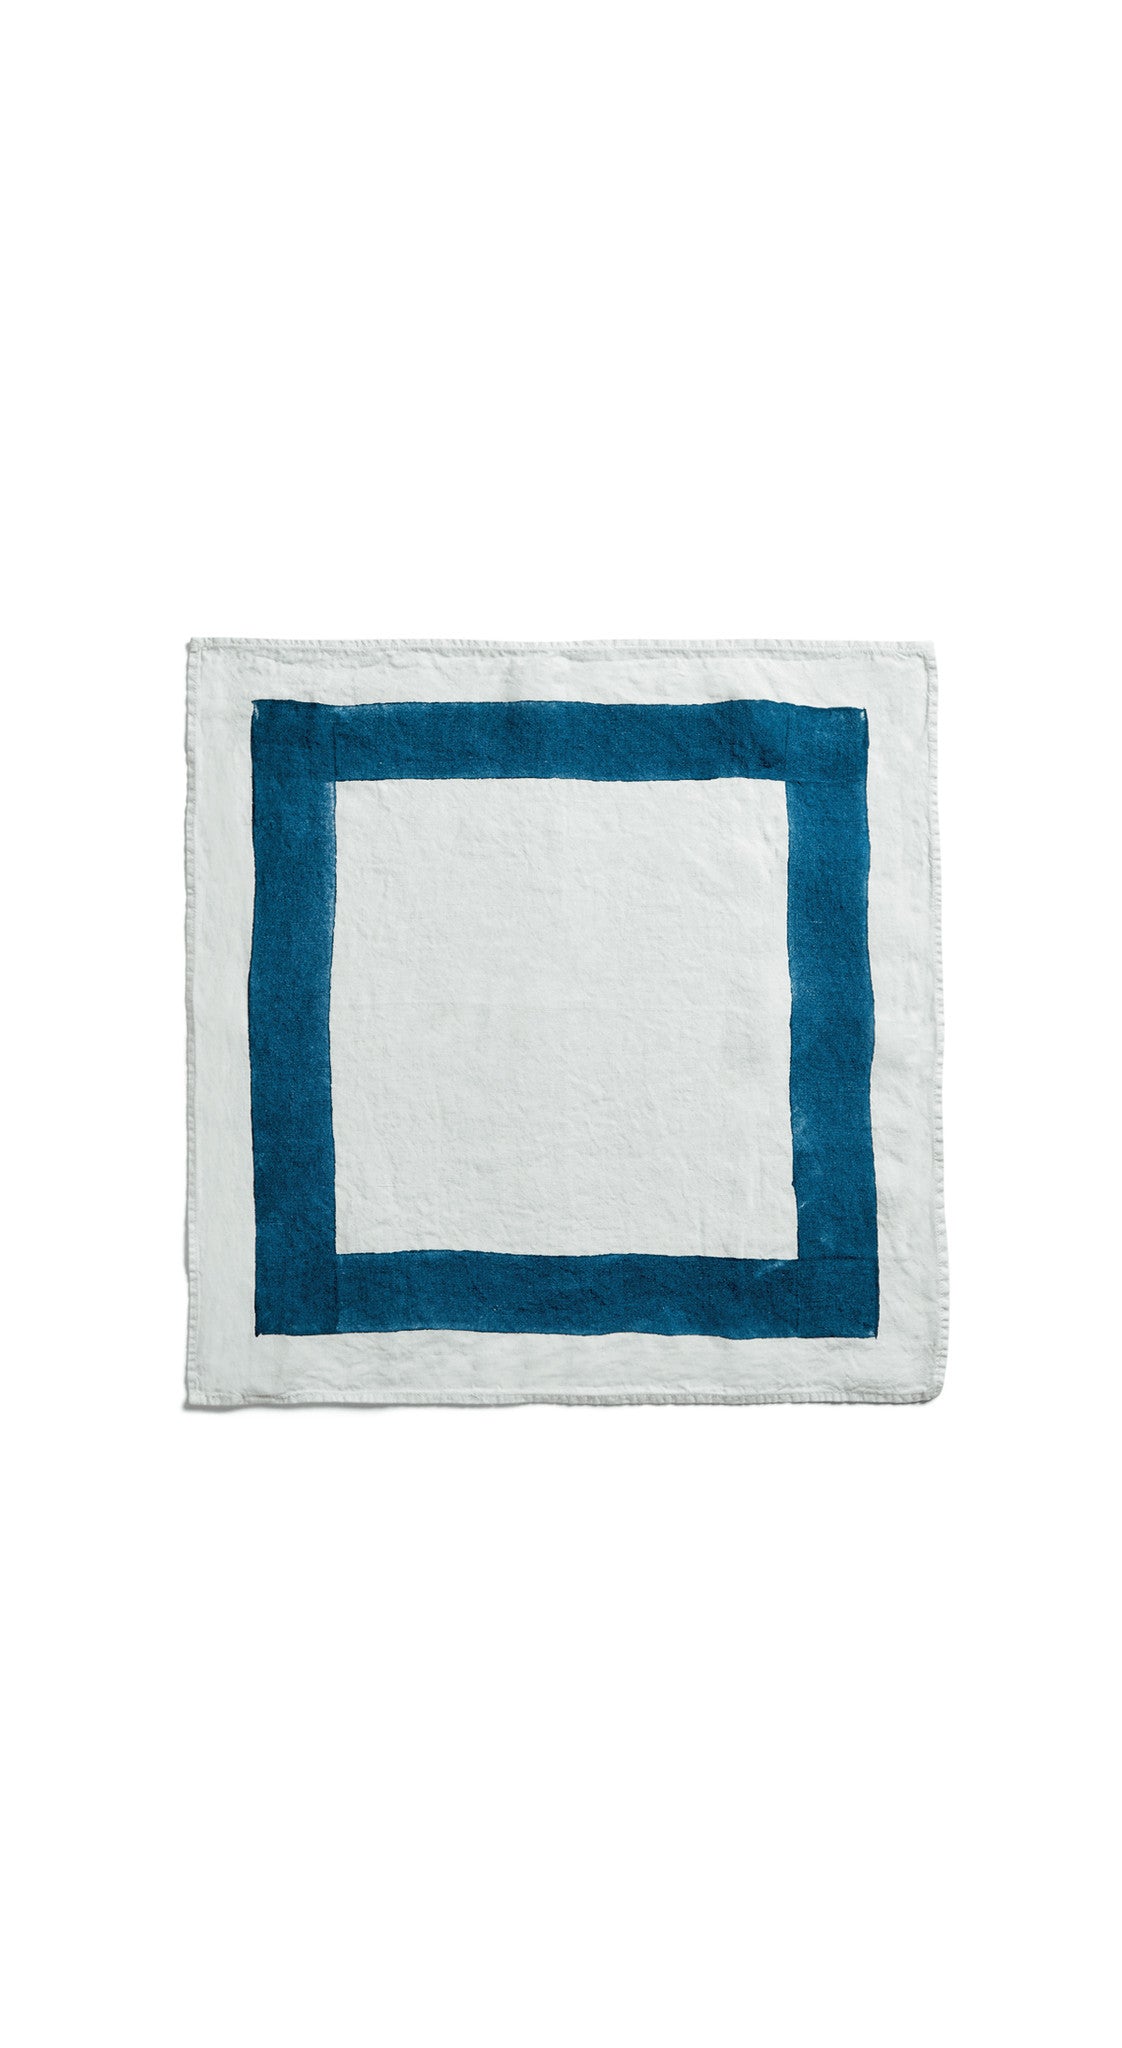 Cornice Linen Napkin in Midnight Blue, 50x50cm